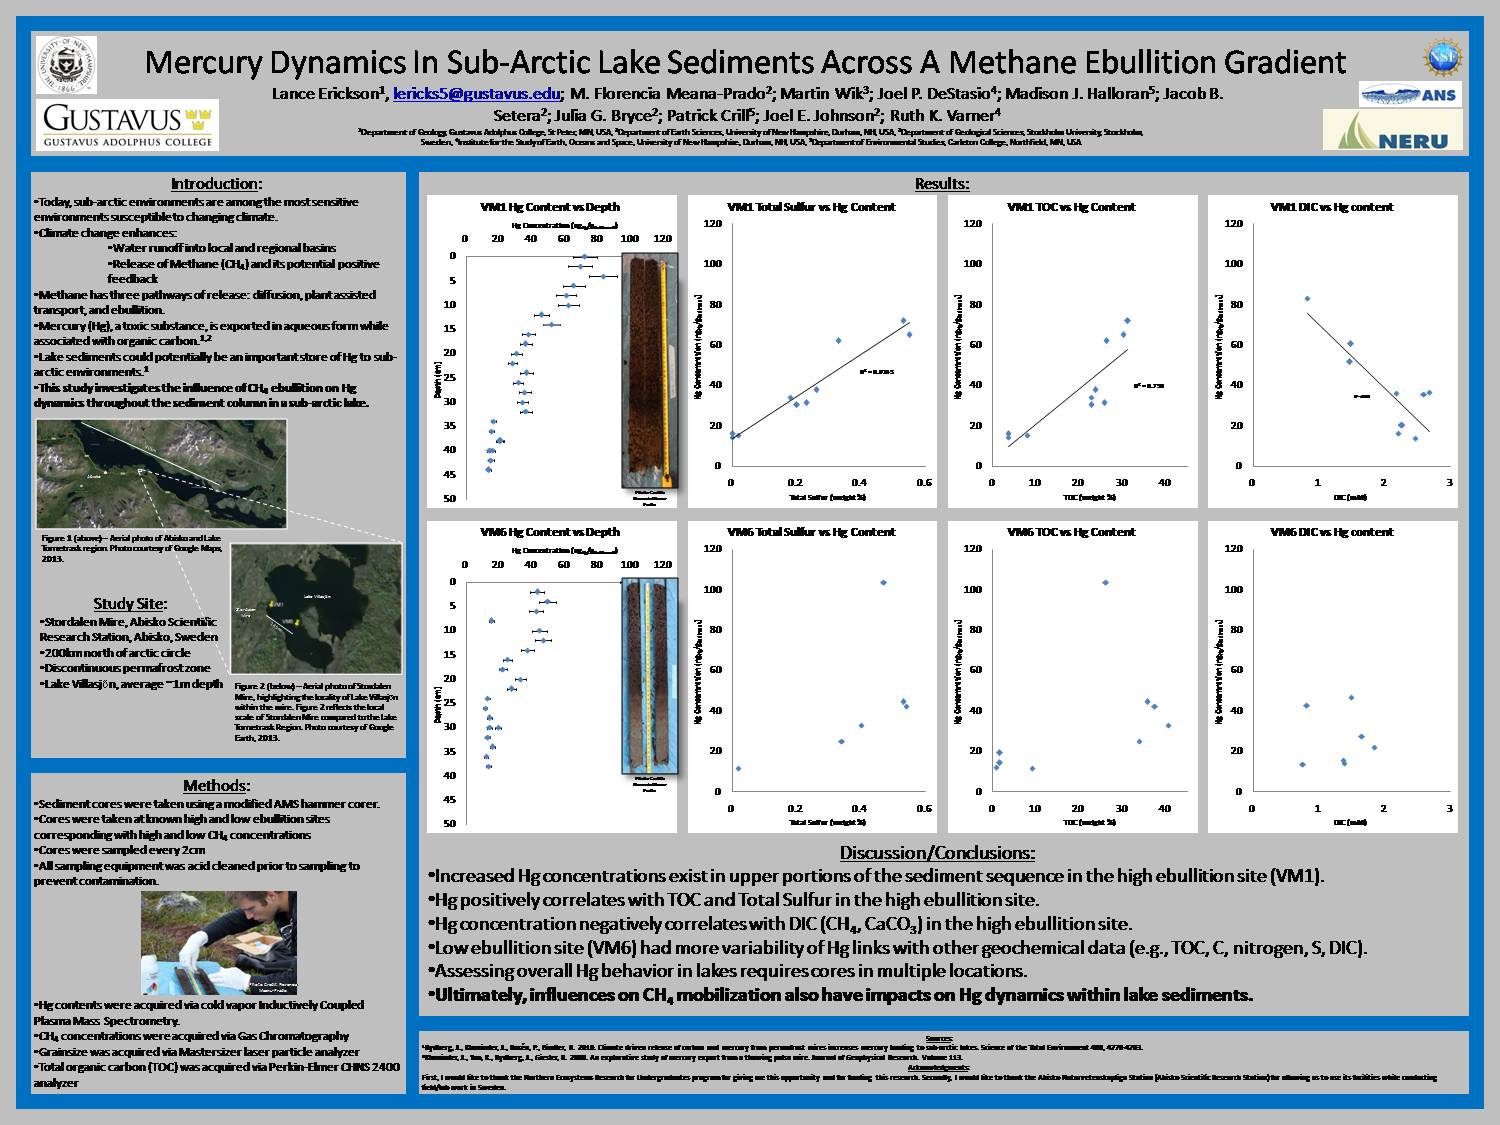 Mercury Dynamics In Sub-Arctic Lake Sediments Across A Methane Ebullition Gradient by lericks5